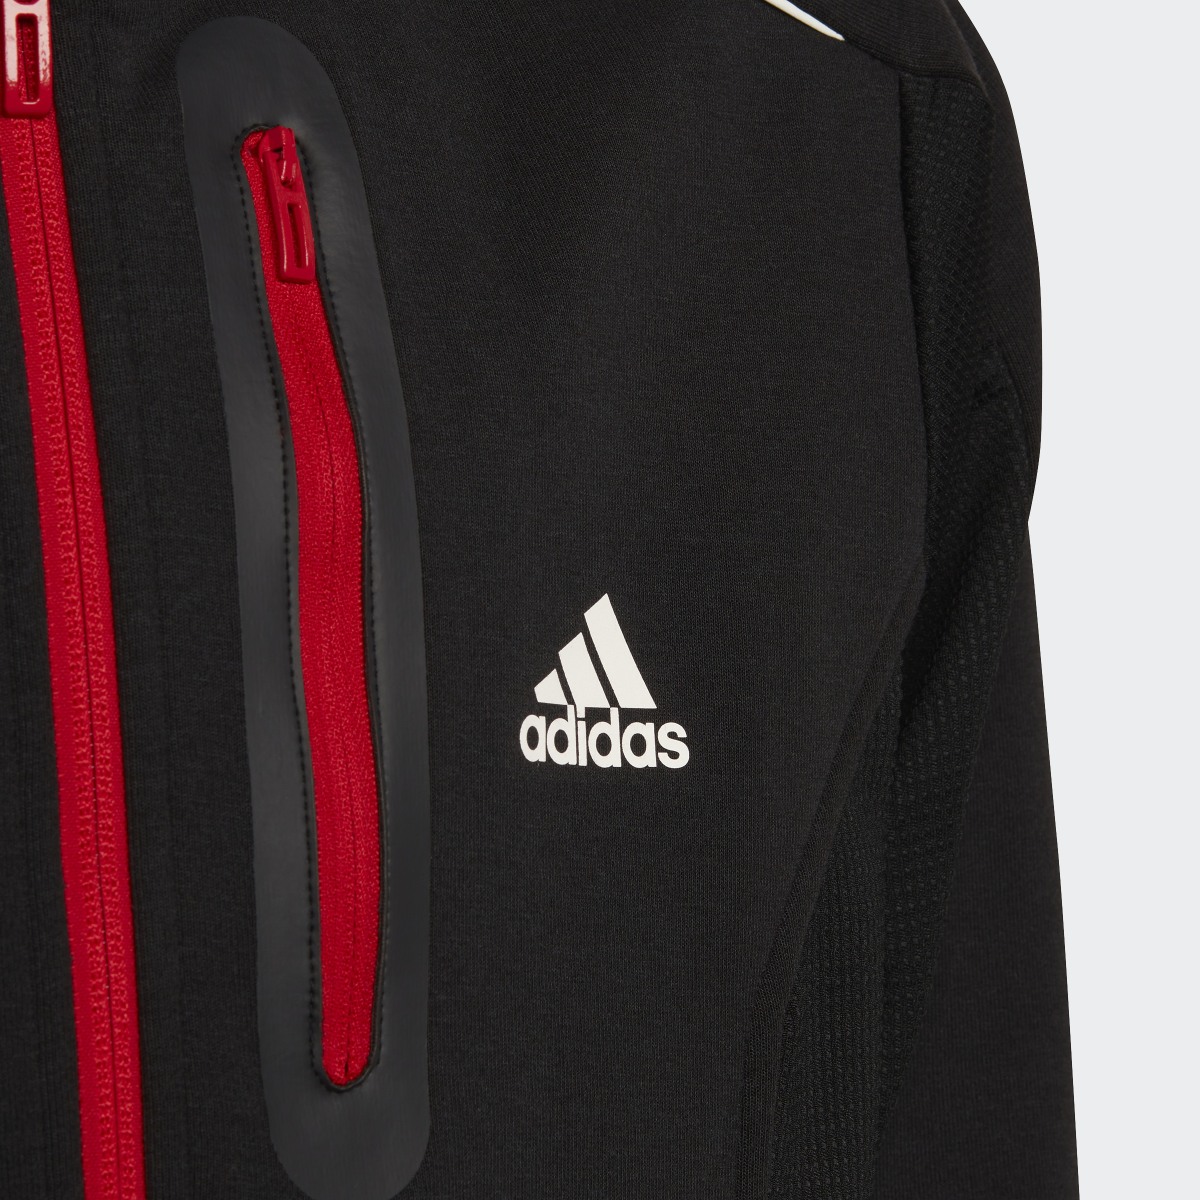 Adidas XFG Techy Inspired Sweatshirt. 5